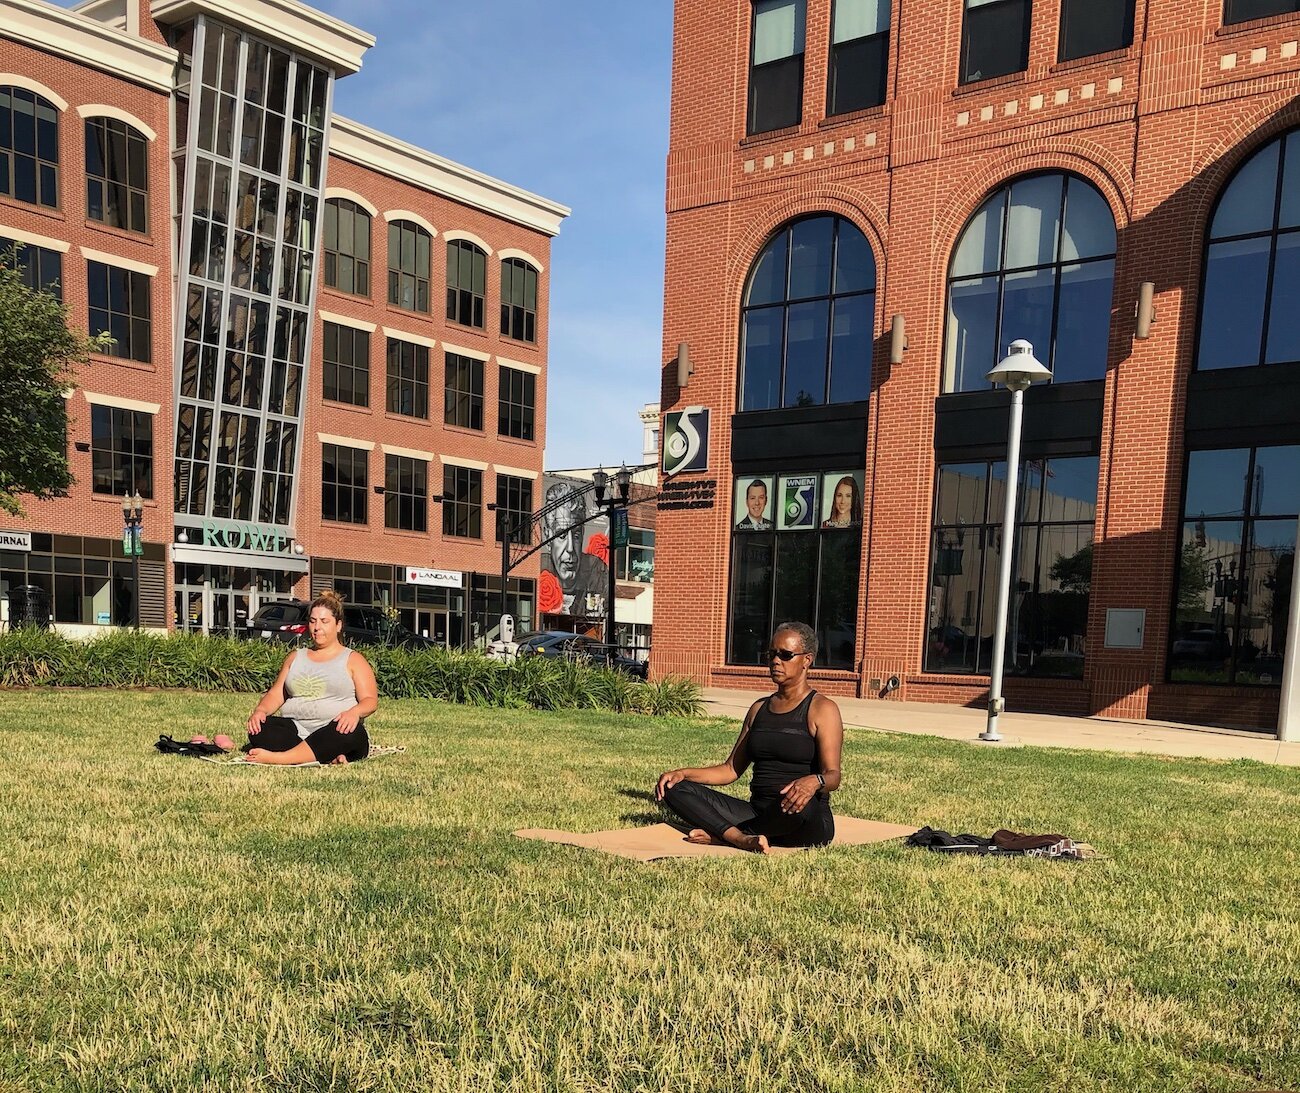 Marcia Faye McGee led outdoor yoga classes near Saginaw Street downtown Flint this summer.